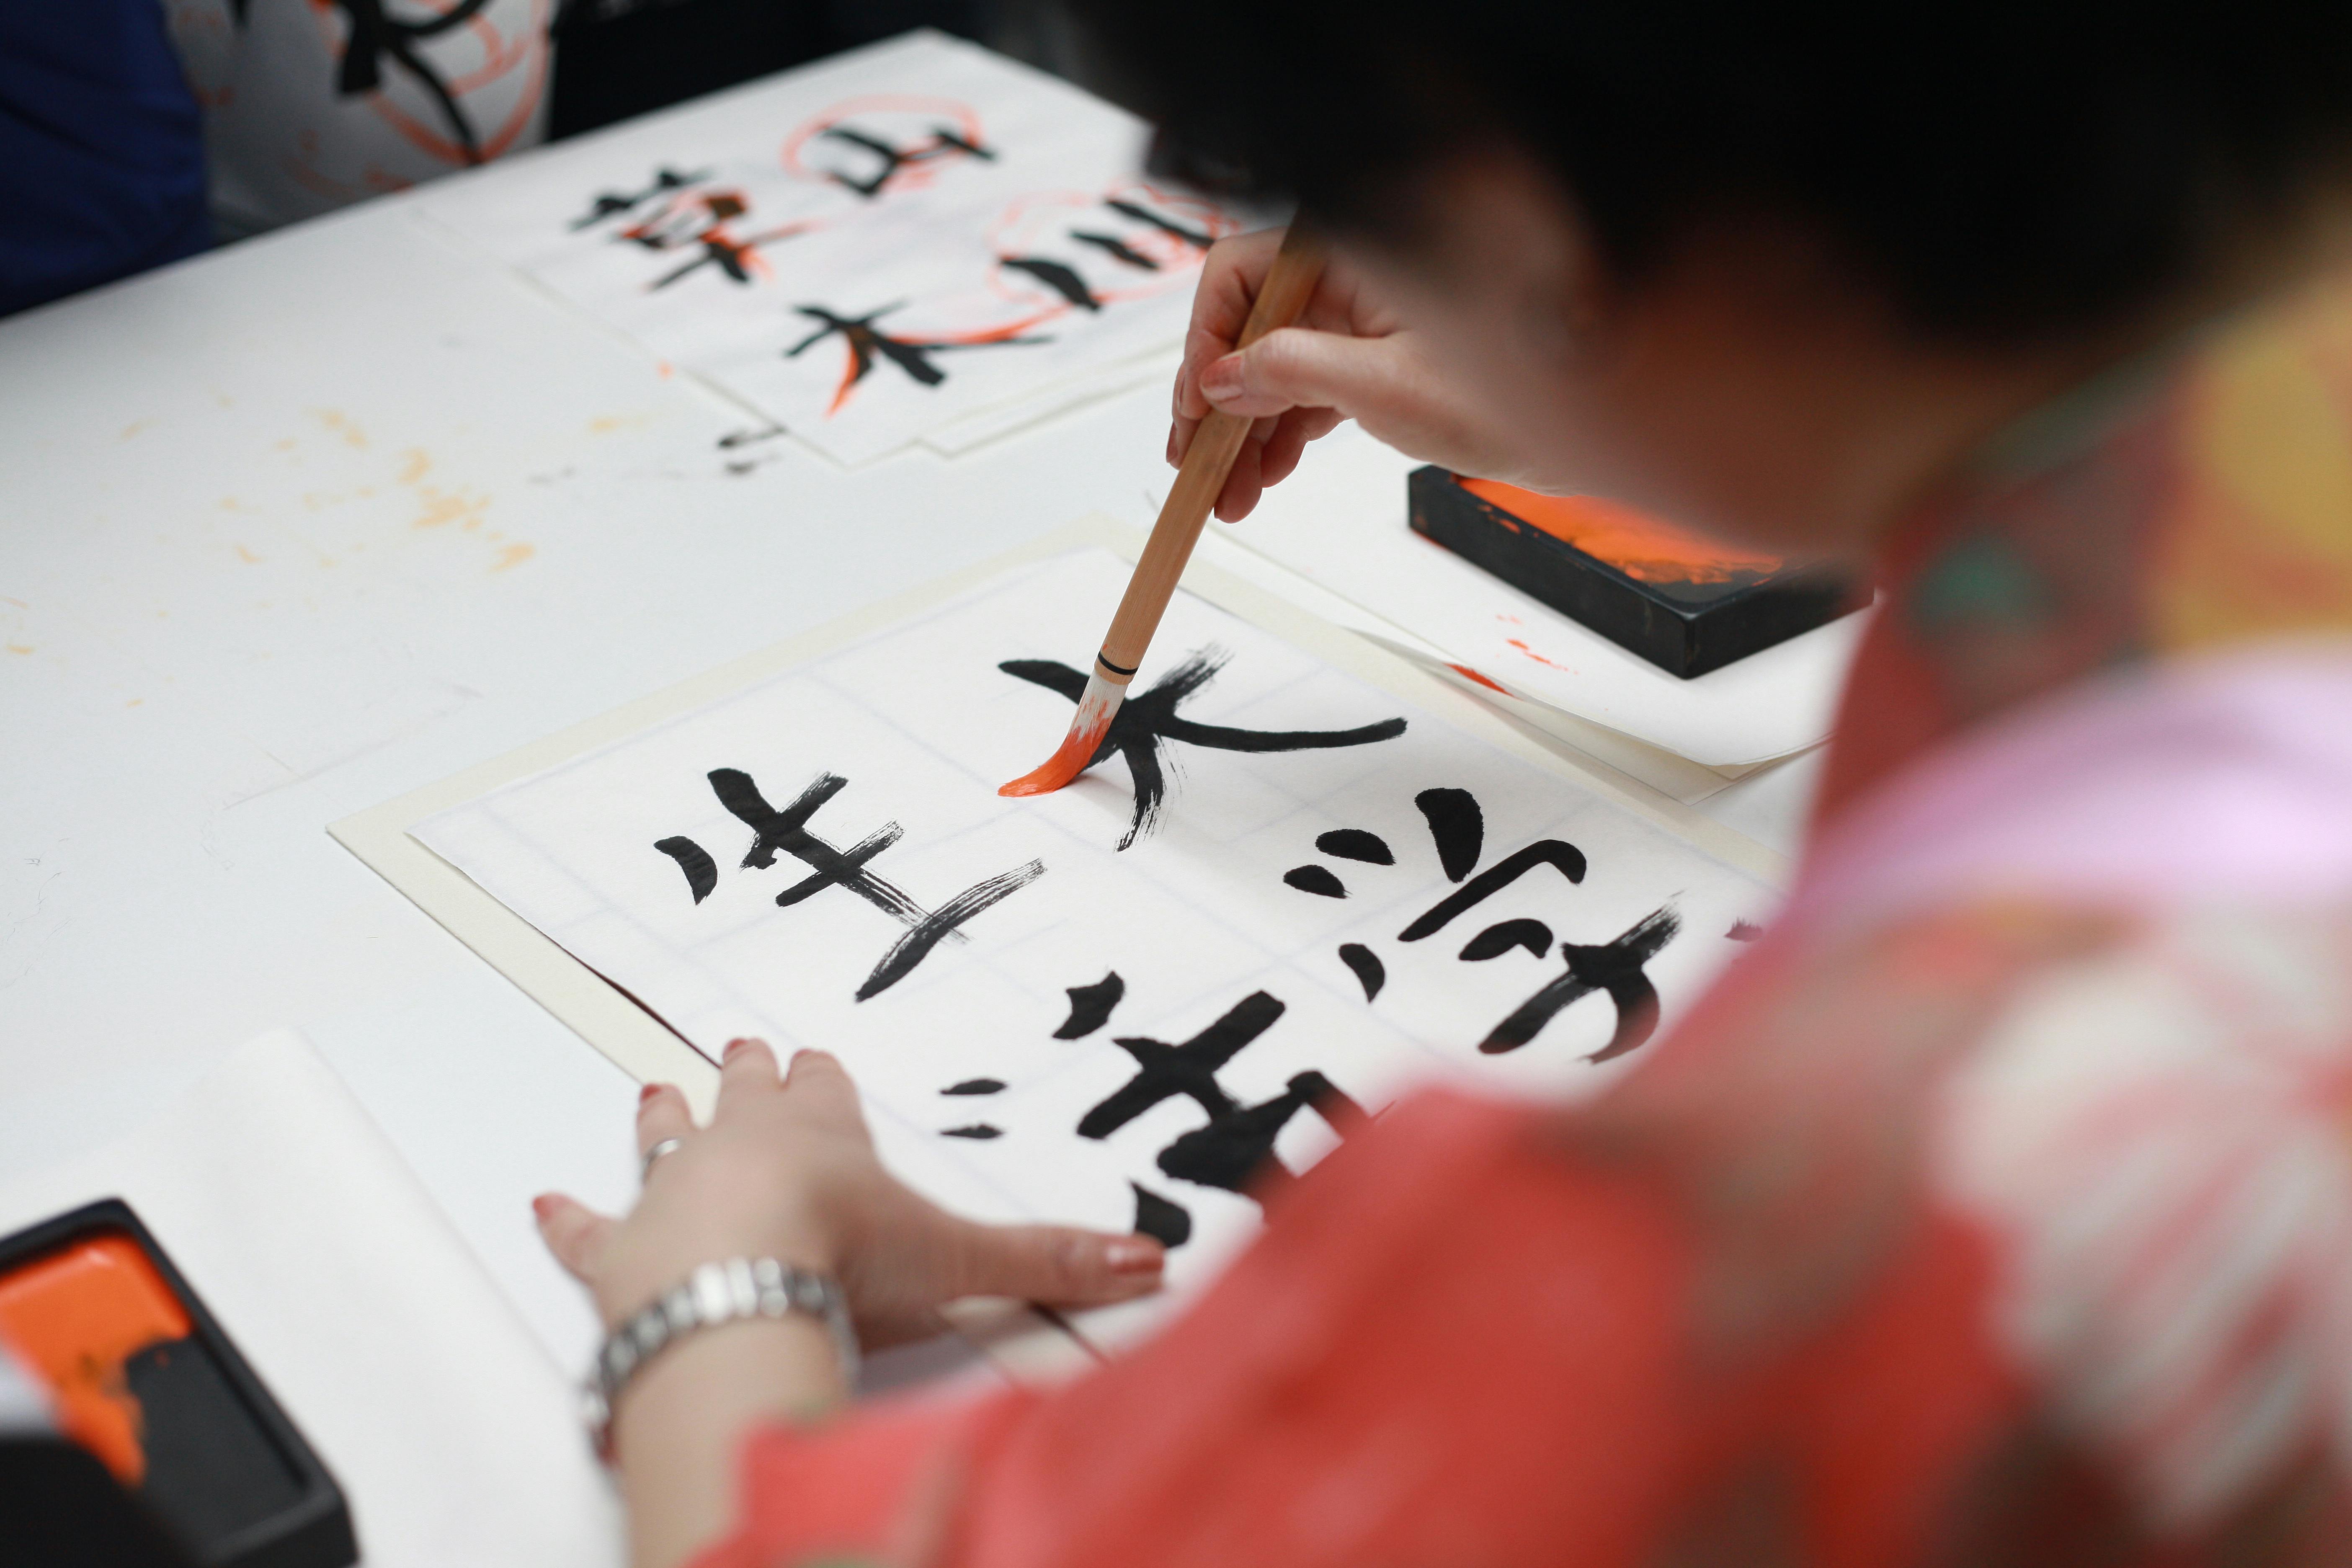 A woman paints kanji on rice paper